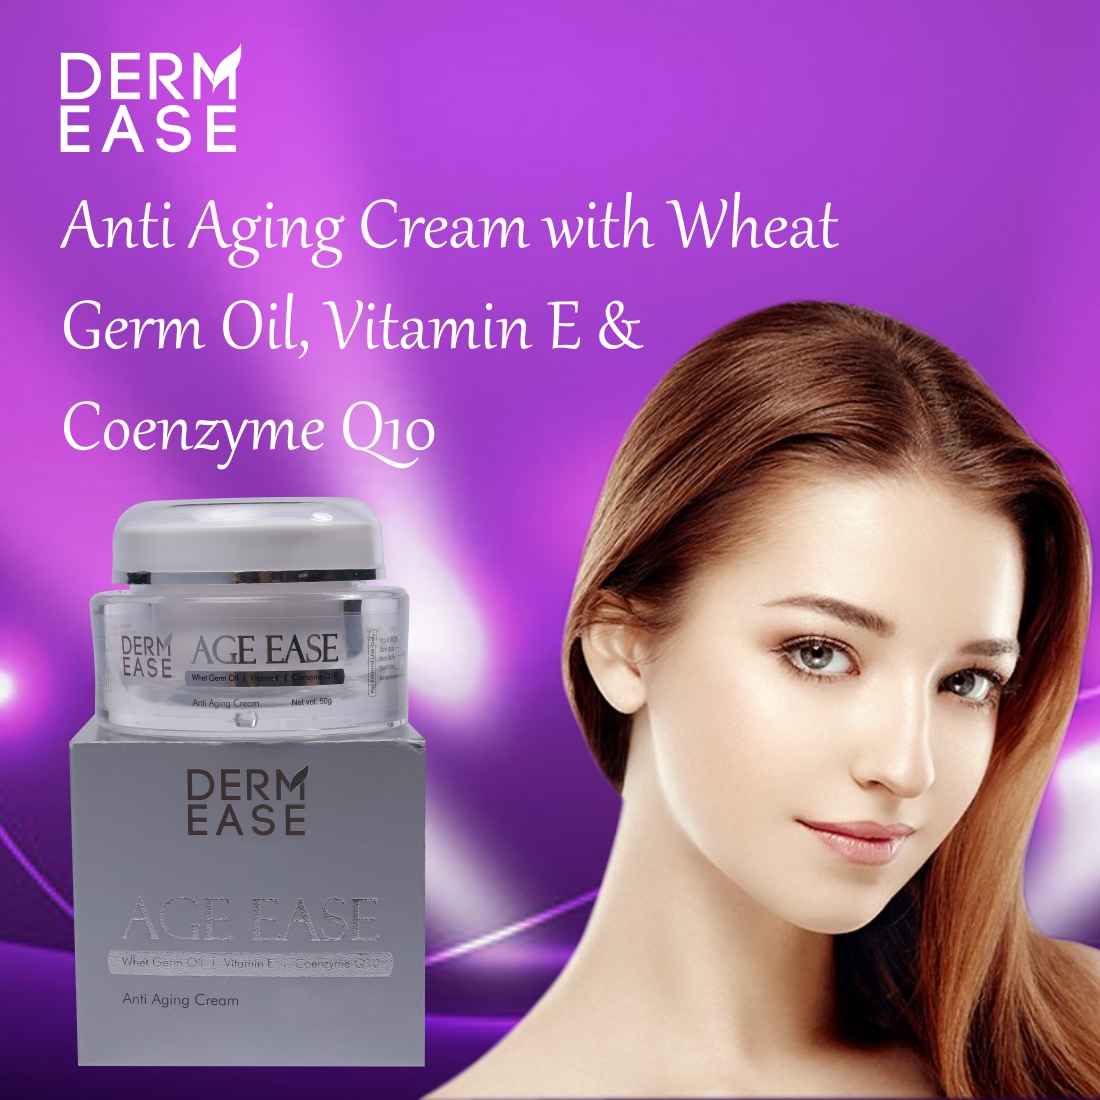 DERM EASE Age Ease Anti Aging Cream